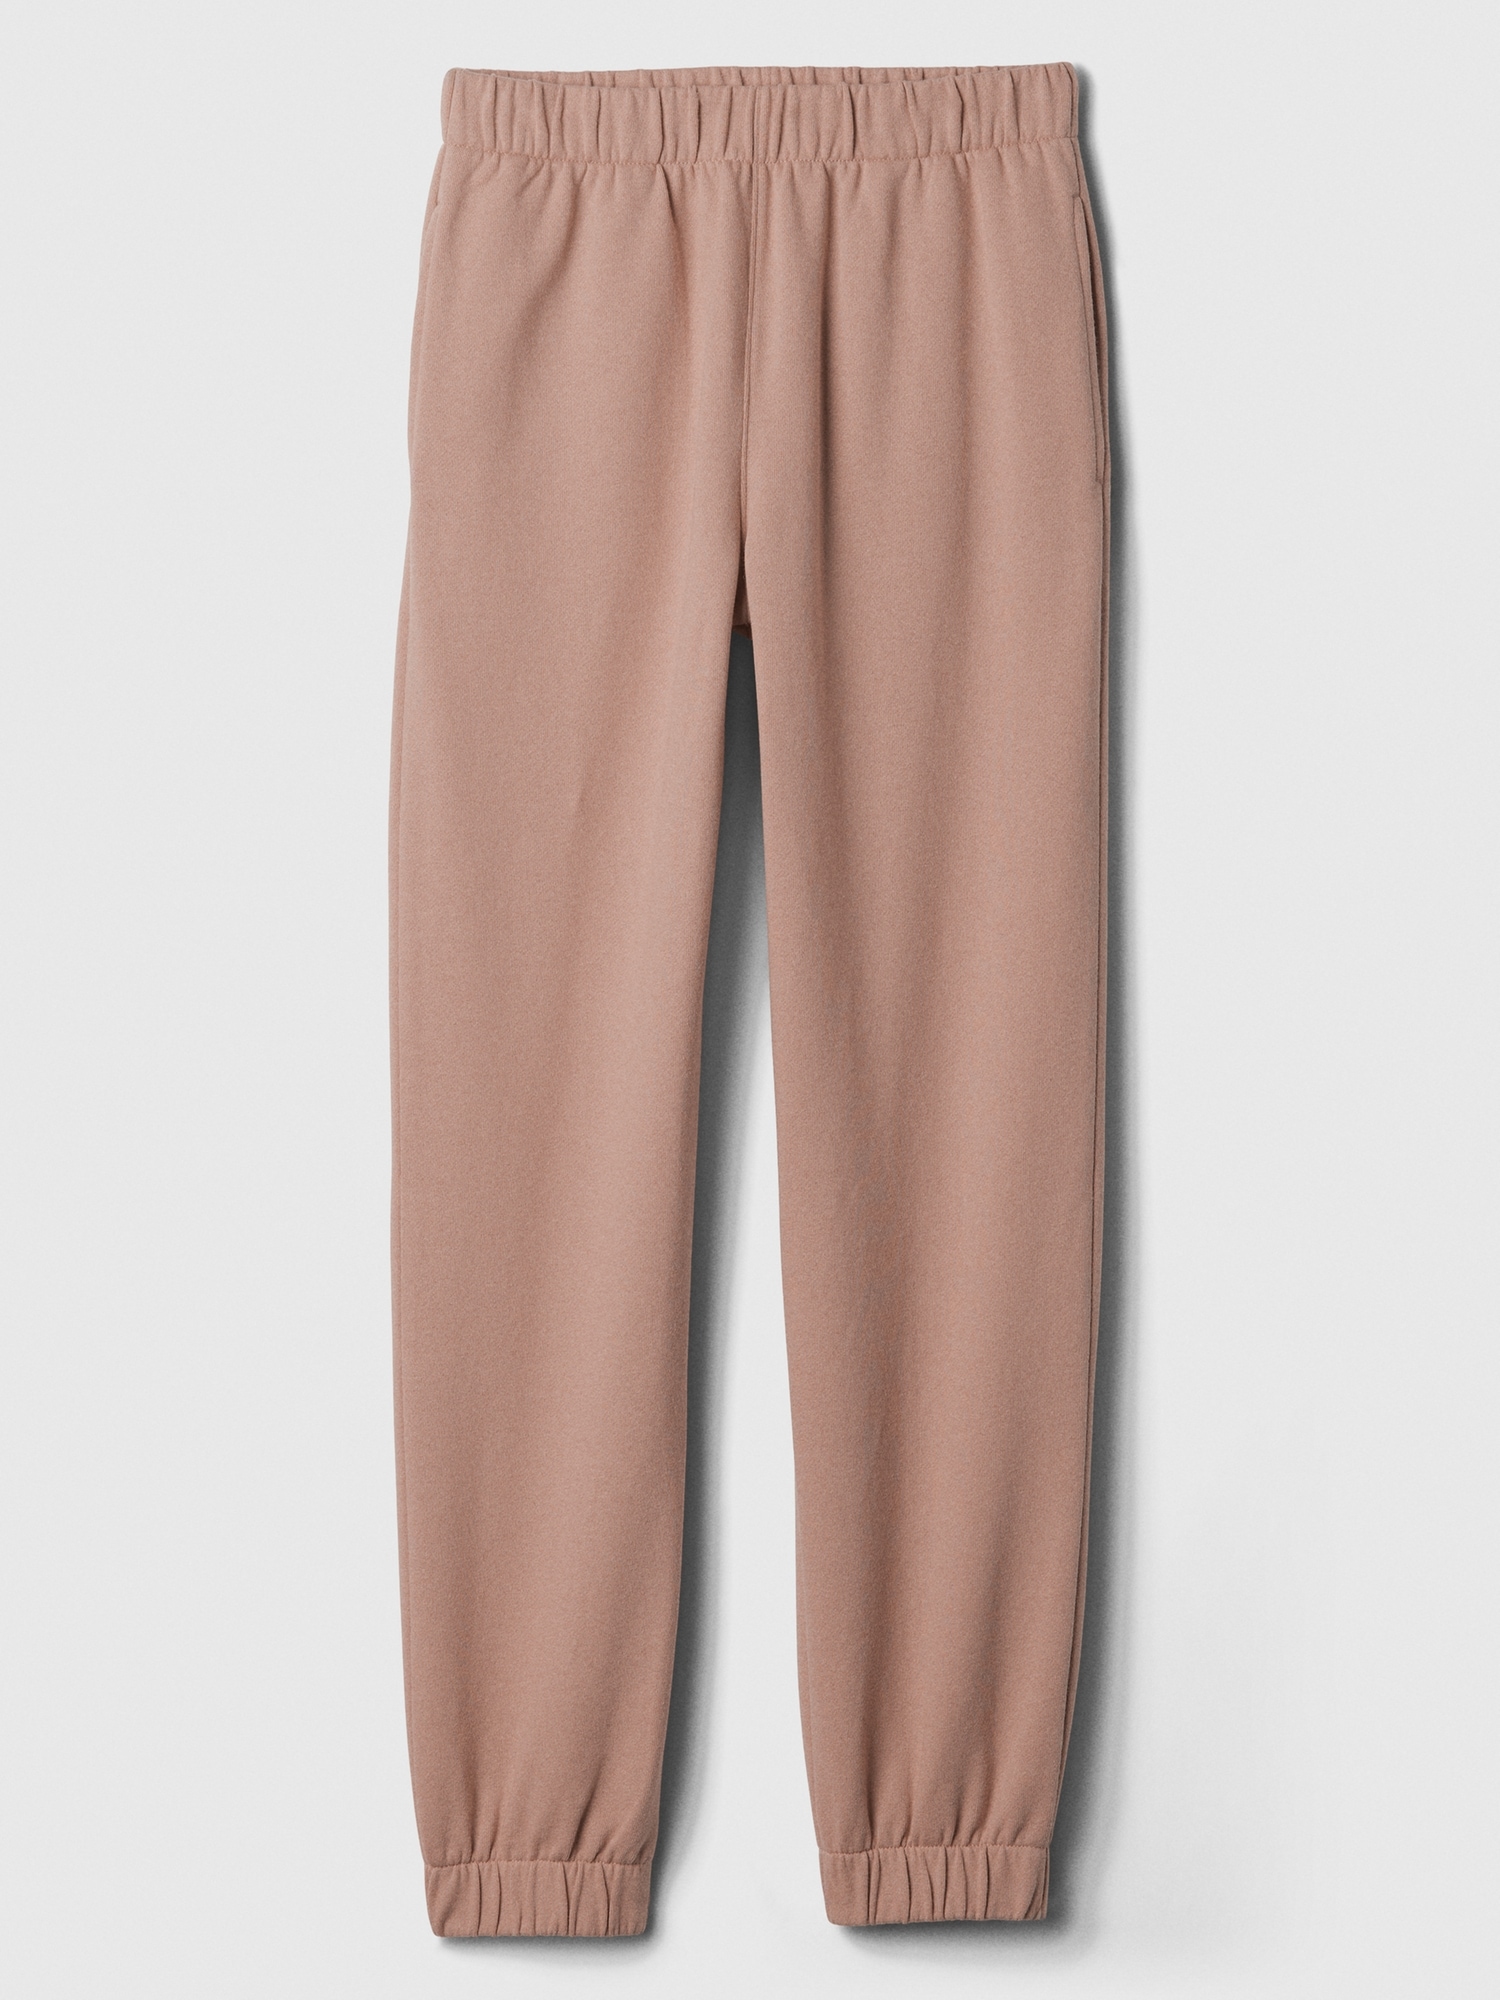 Gap Factory Hot Pink Logo Bootcut Fleece Sweatpants Size XL